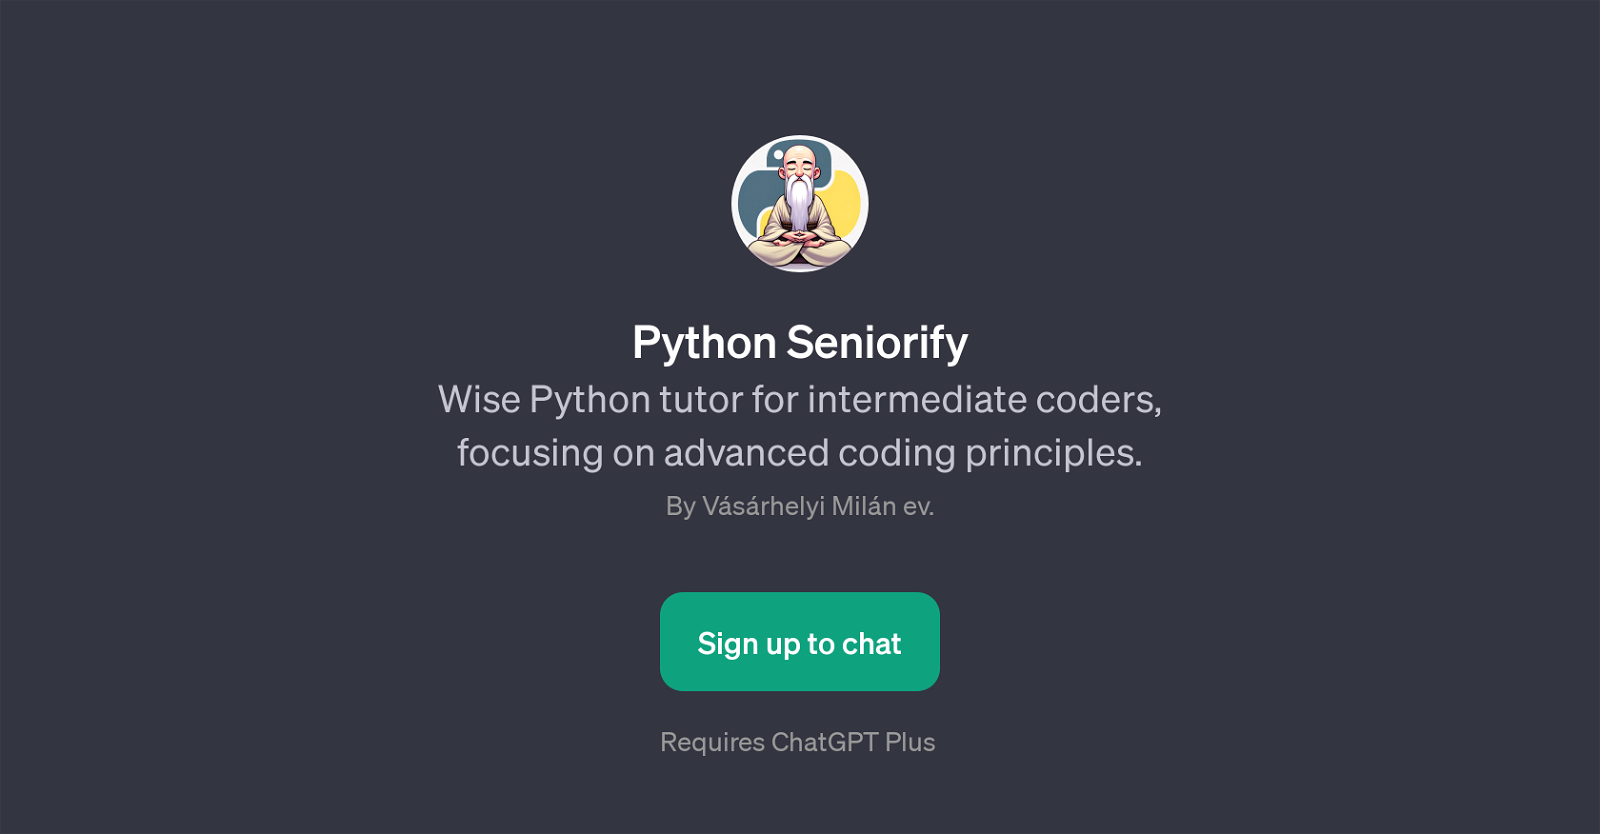 Python Seniorify website